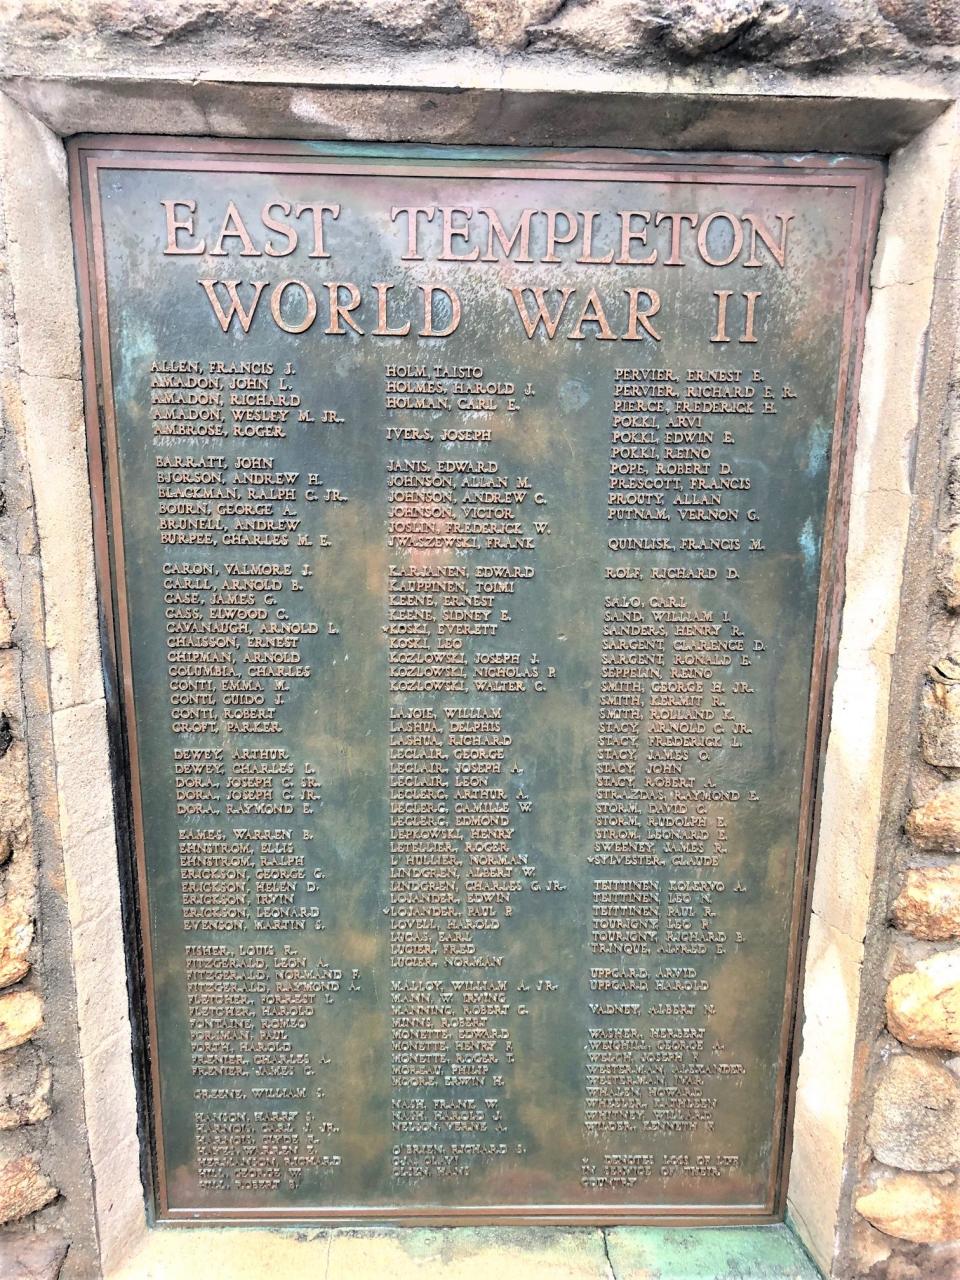 The World War II Memorial for East Templeton.